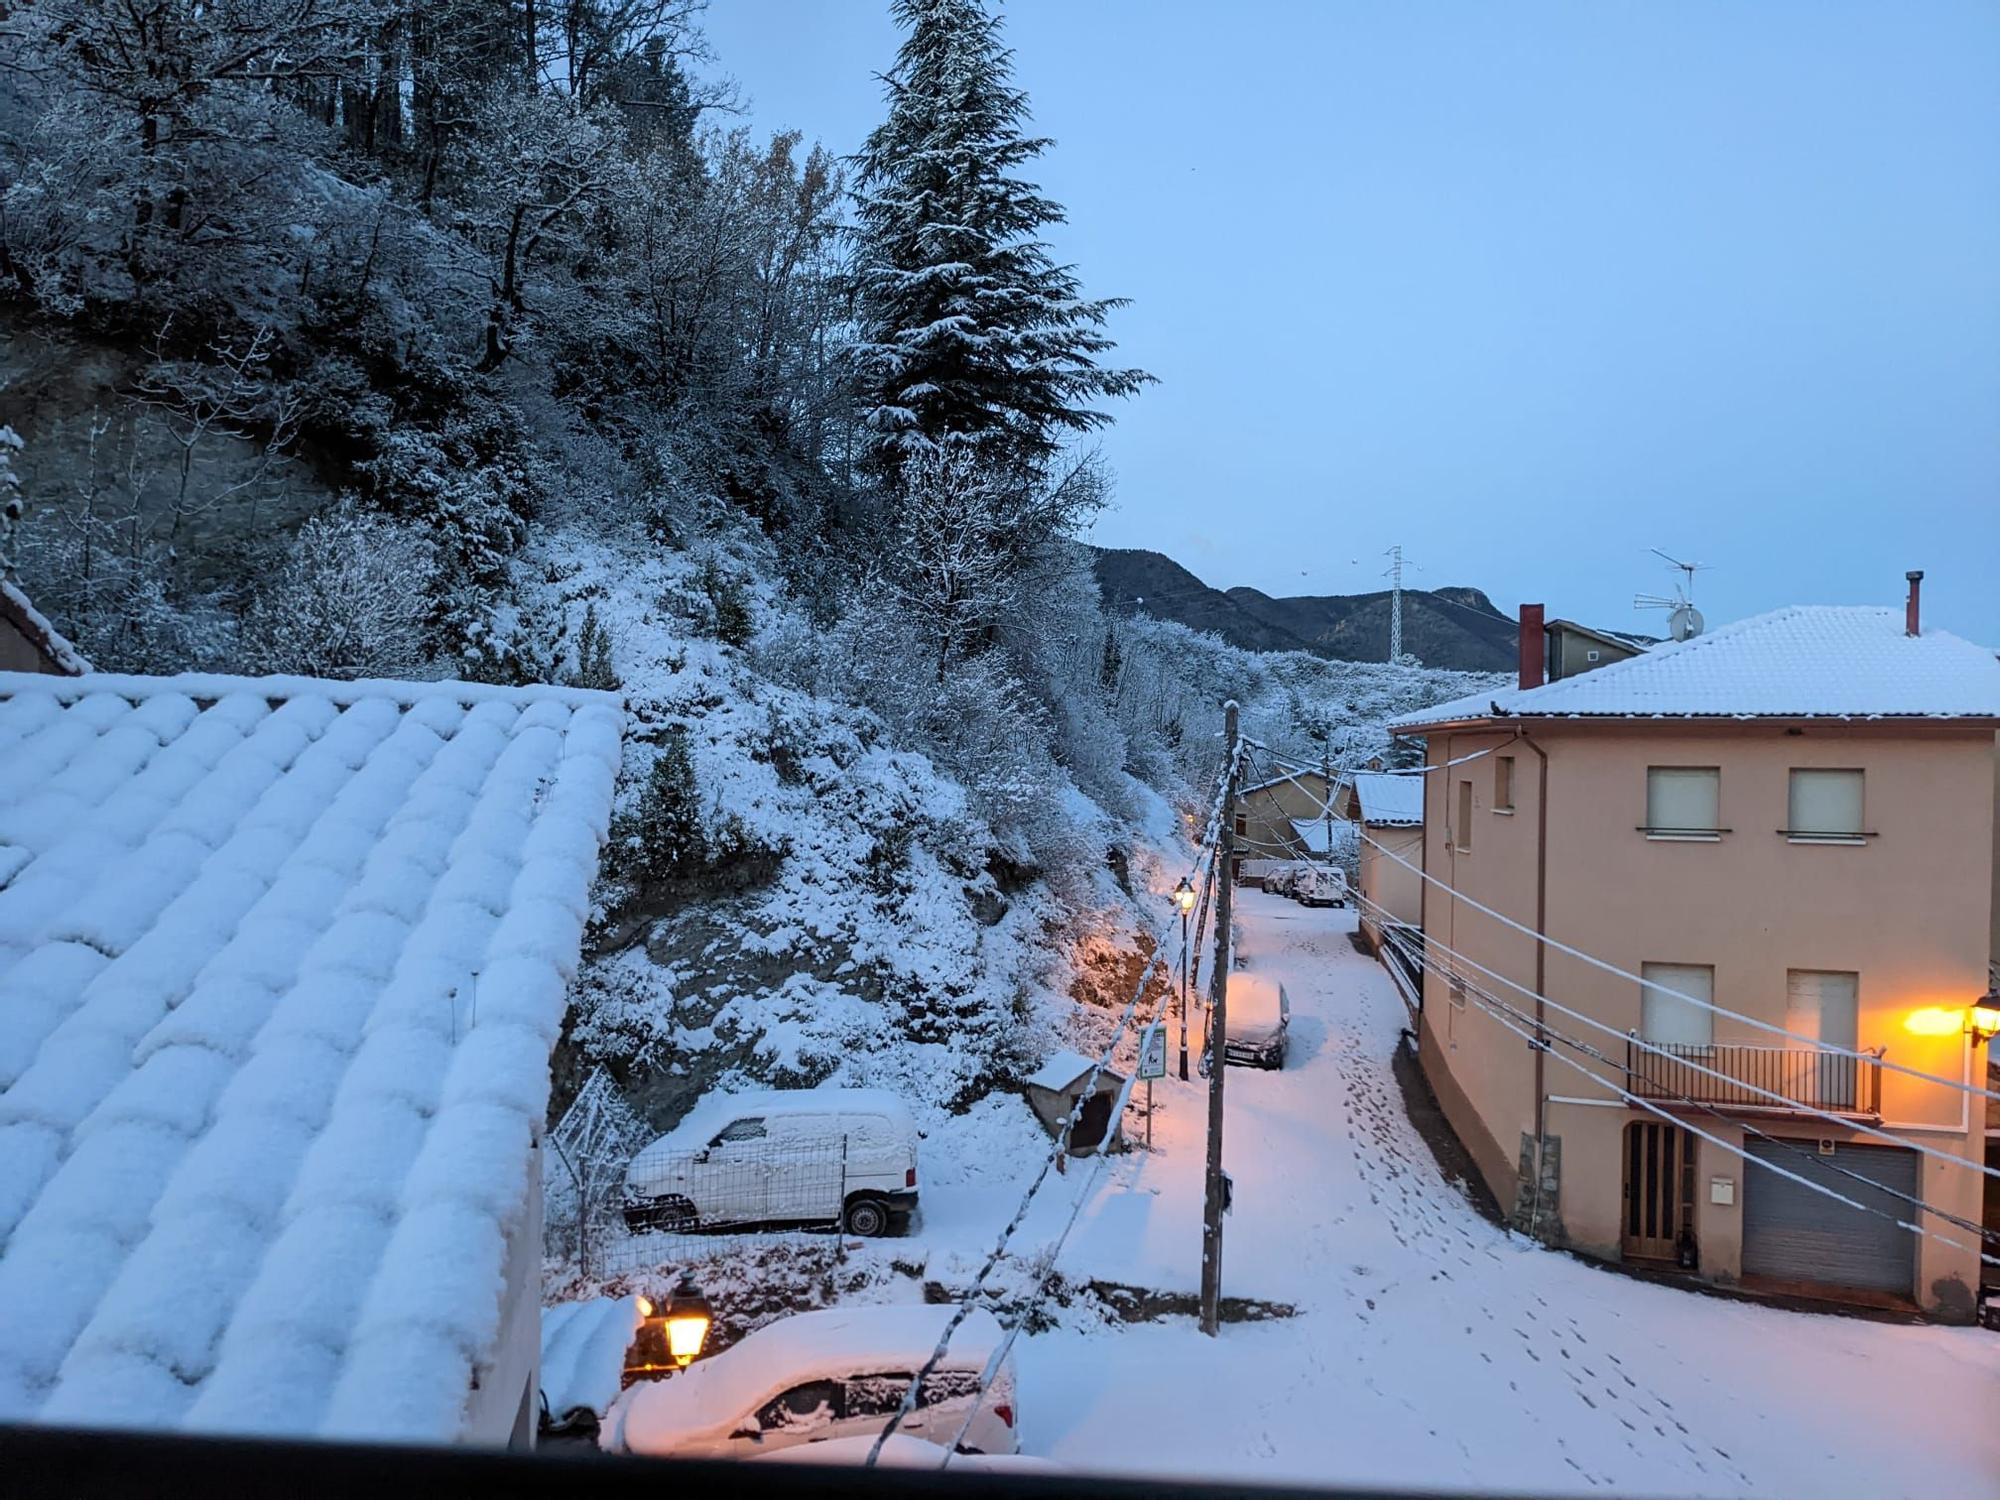 Paisatges nevats al Berguedà